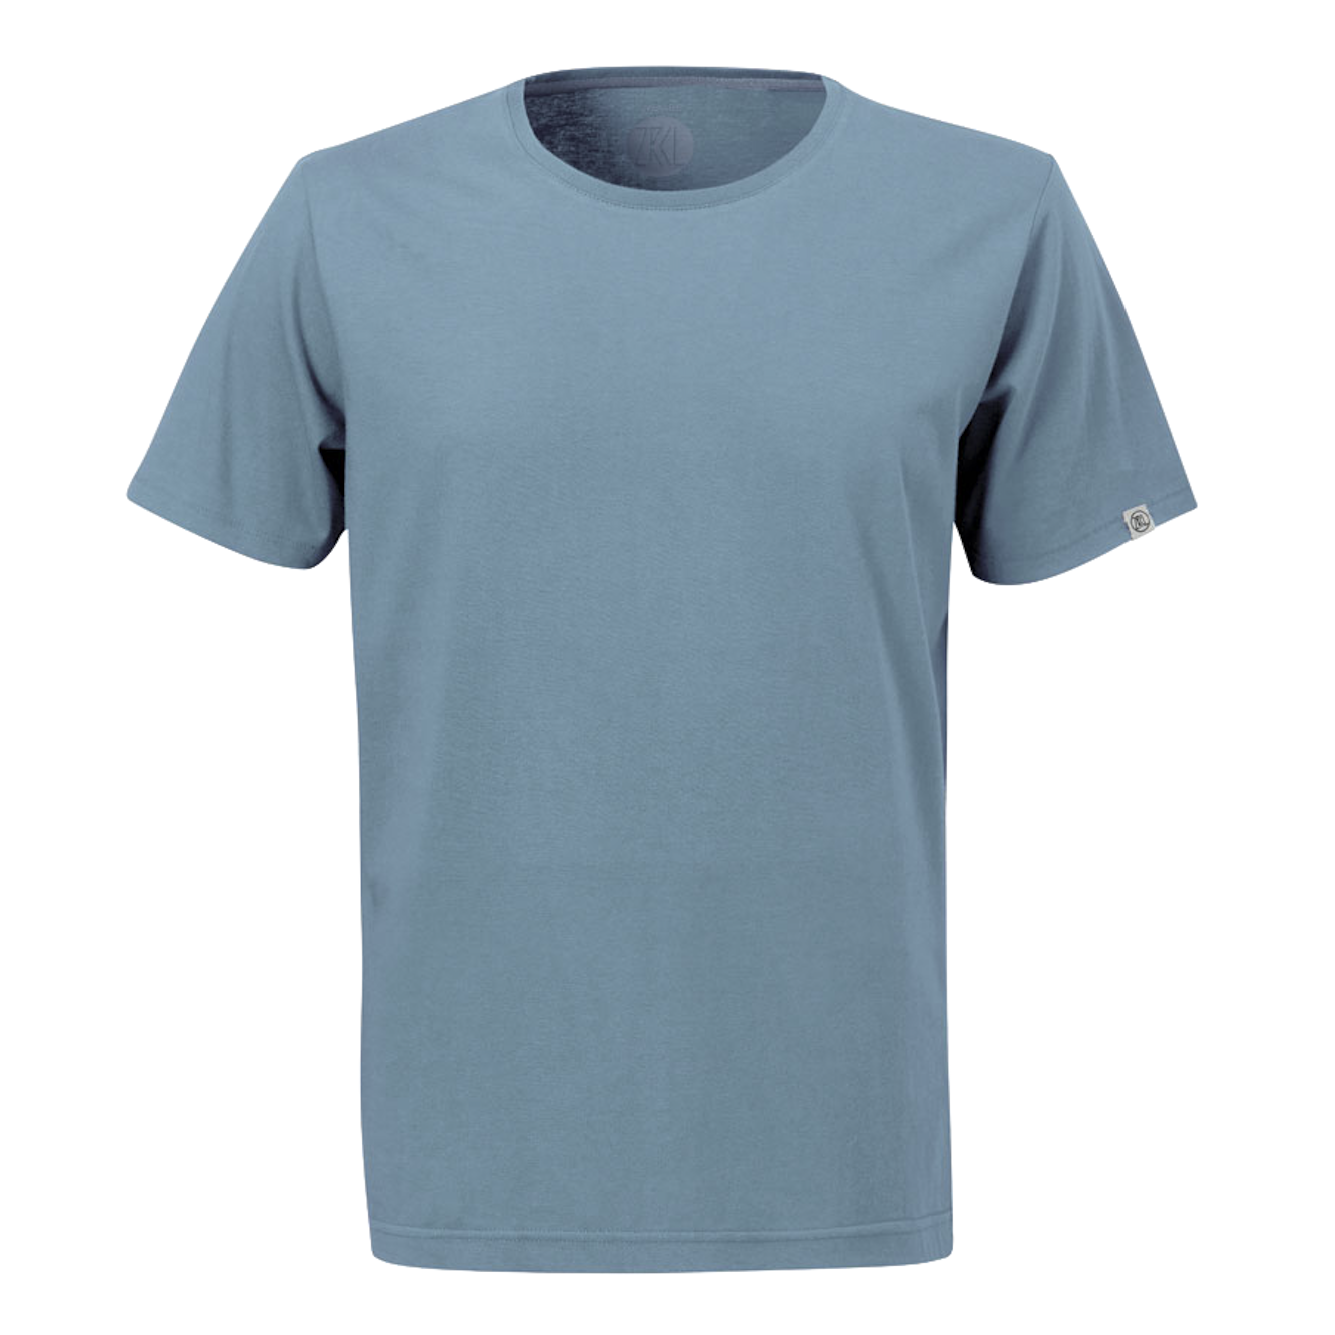 ZRCL ZRCL, M Basic T-Shirt, steel blue, S